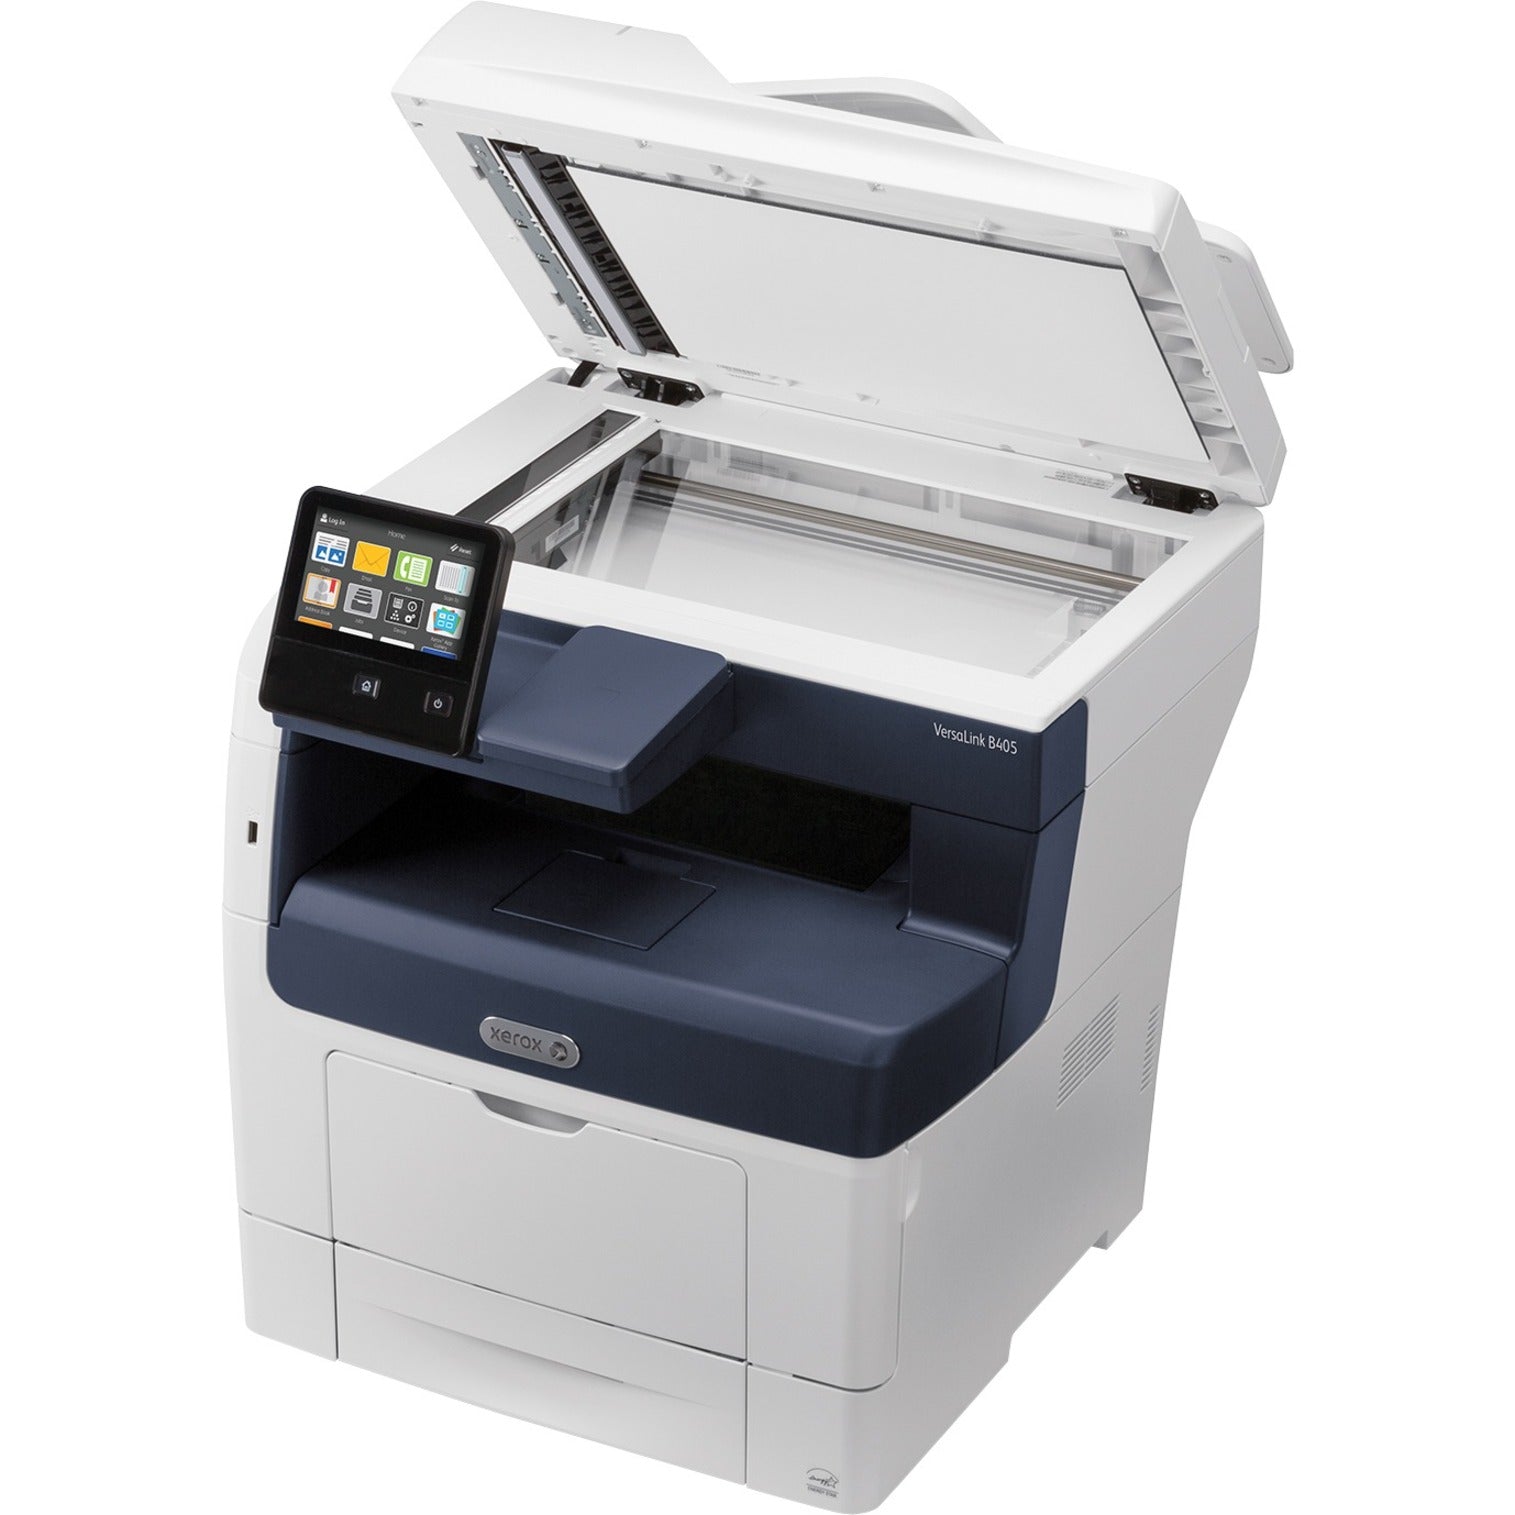 Xerox VersaLink B405 Laser Multifunction Printer [Discontinued]